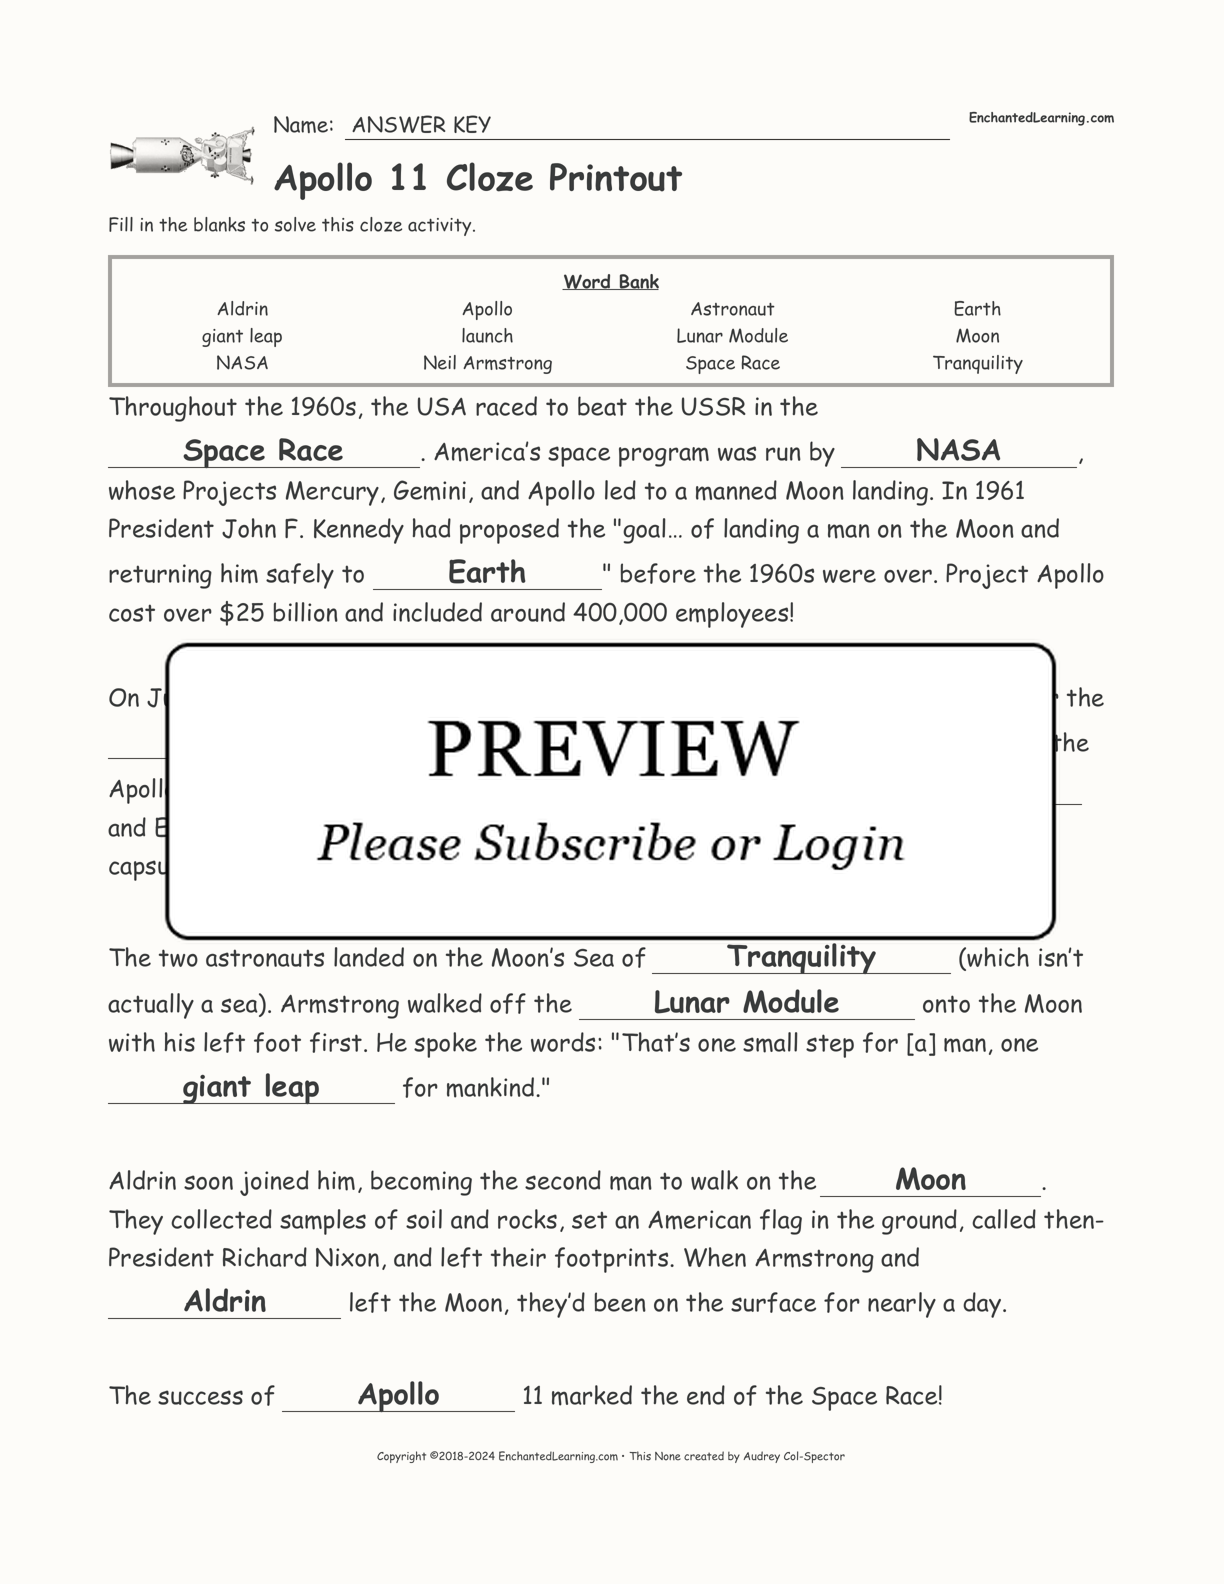 Apollo 11 Cloze Printout interactive worksheet page 2